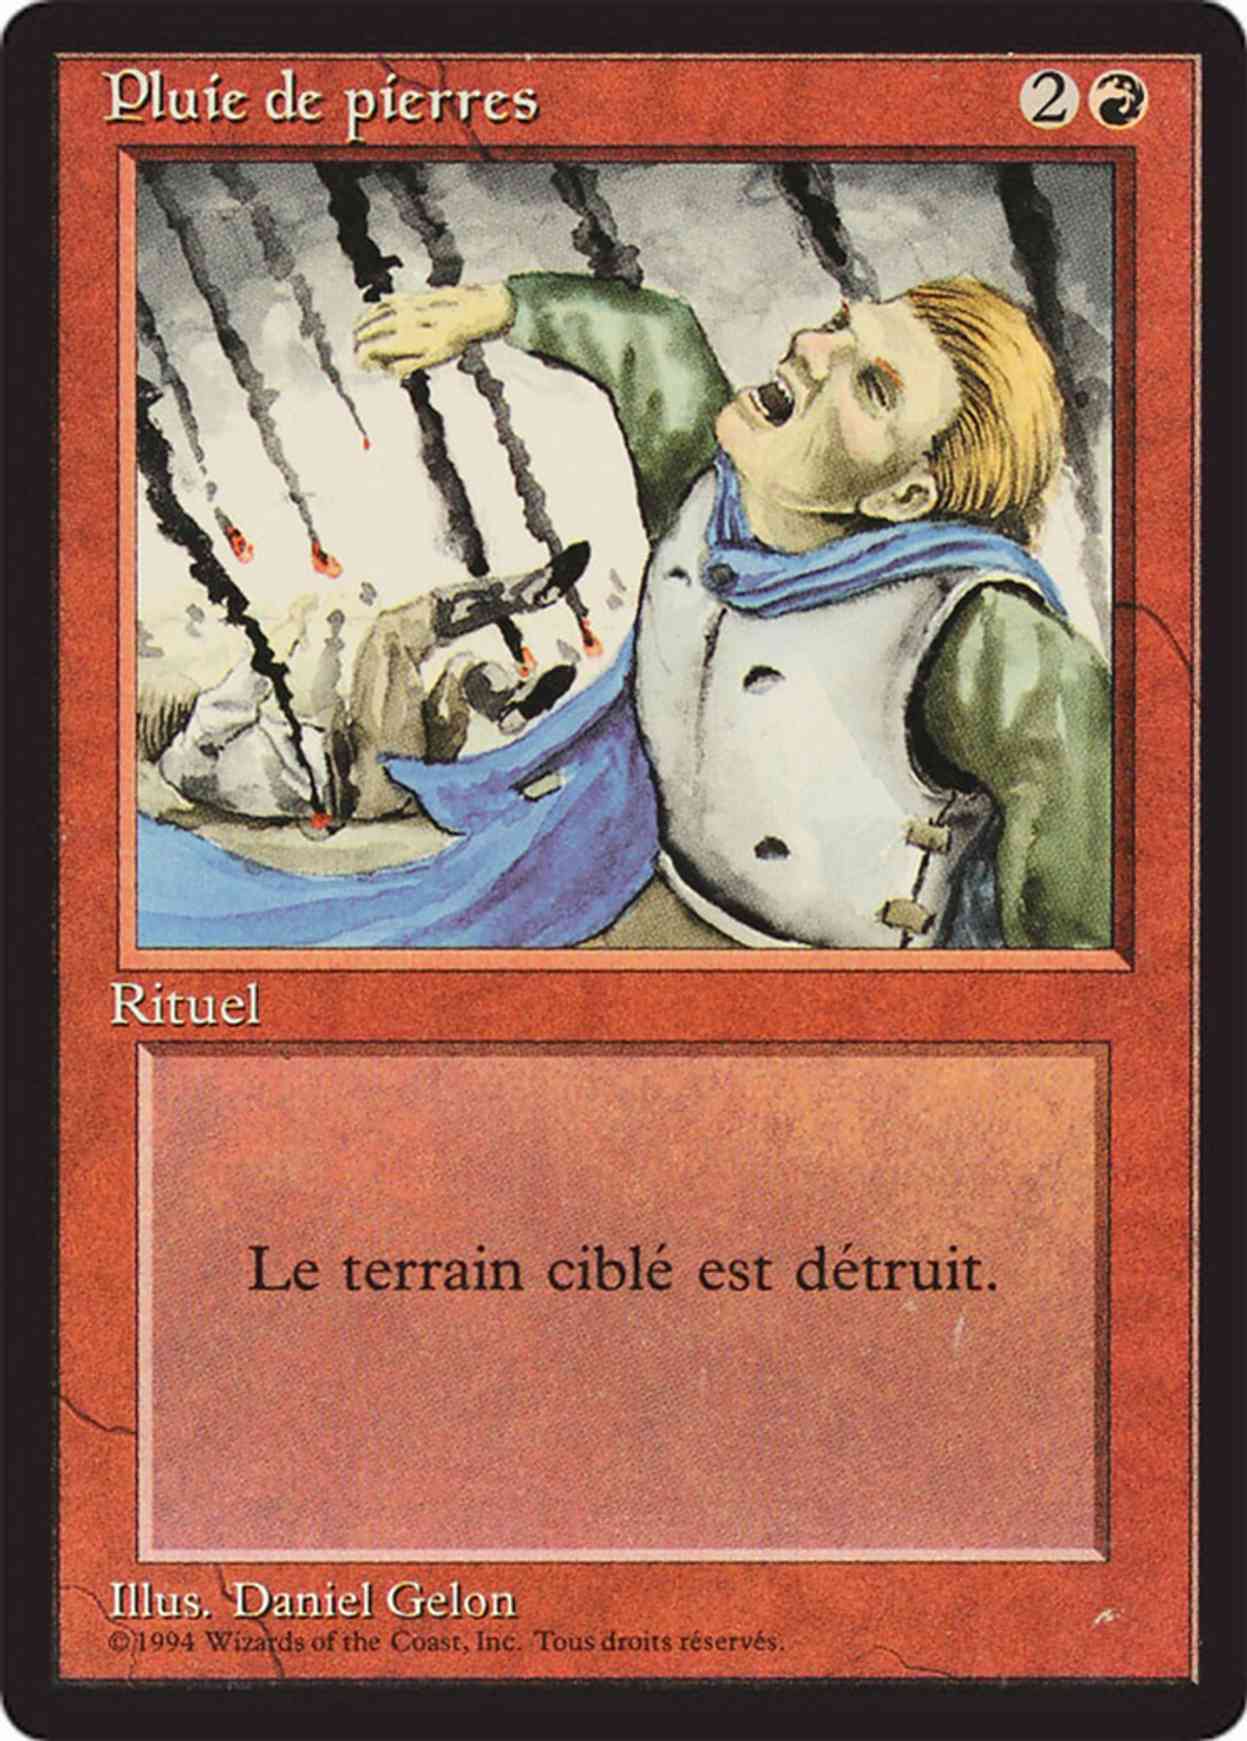 Stone Rain magic card front